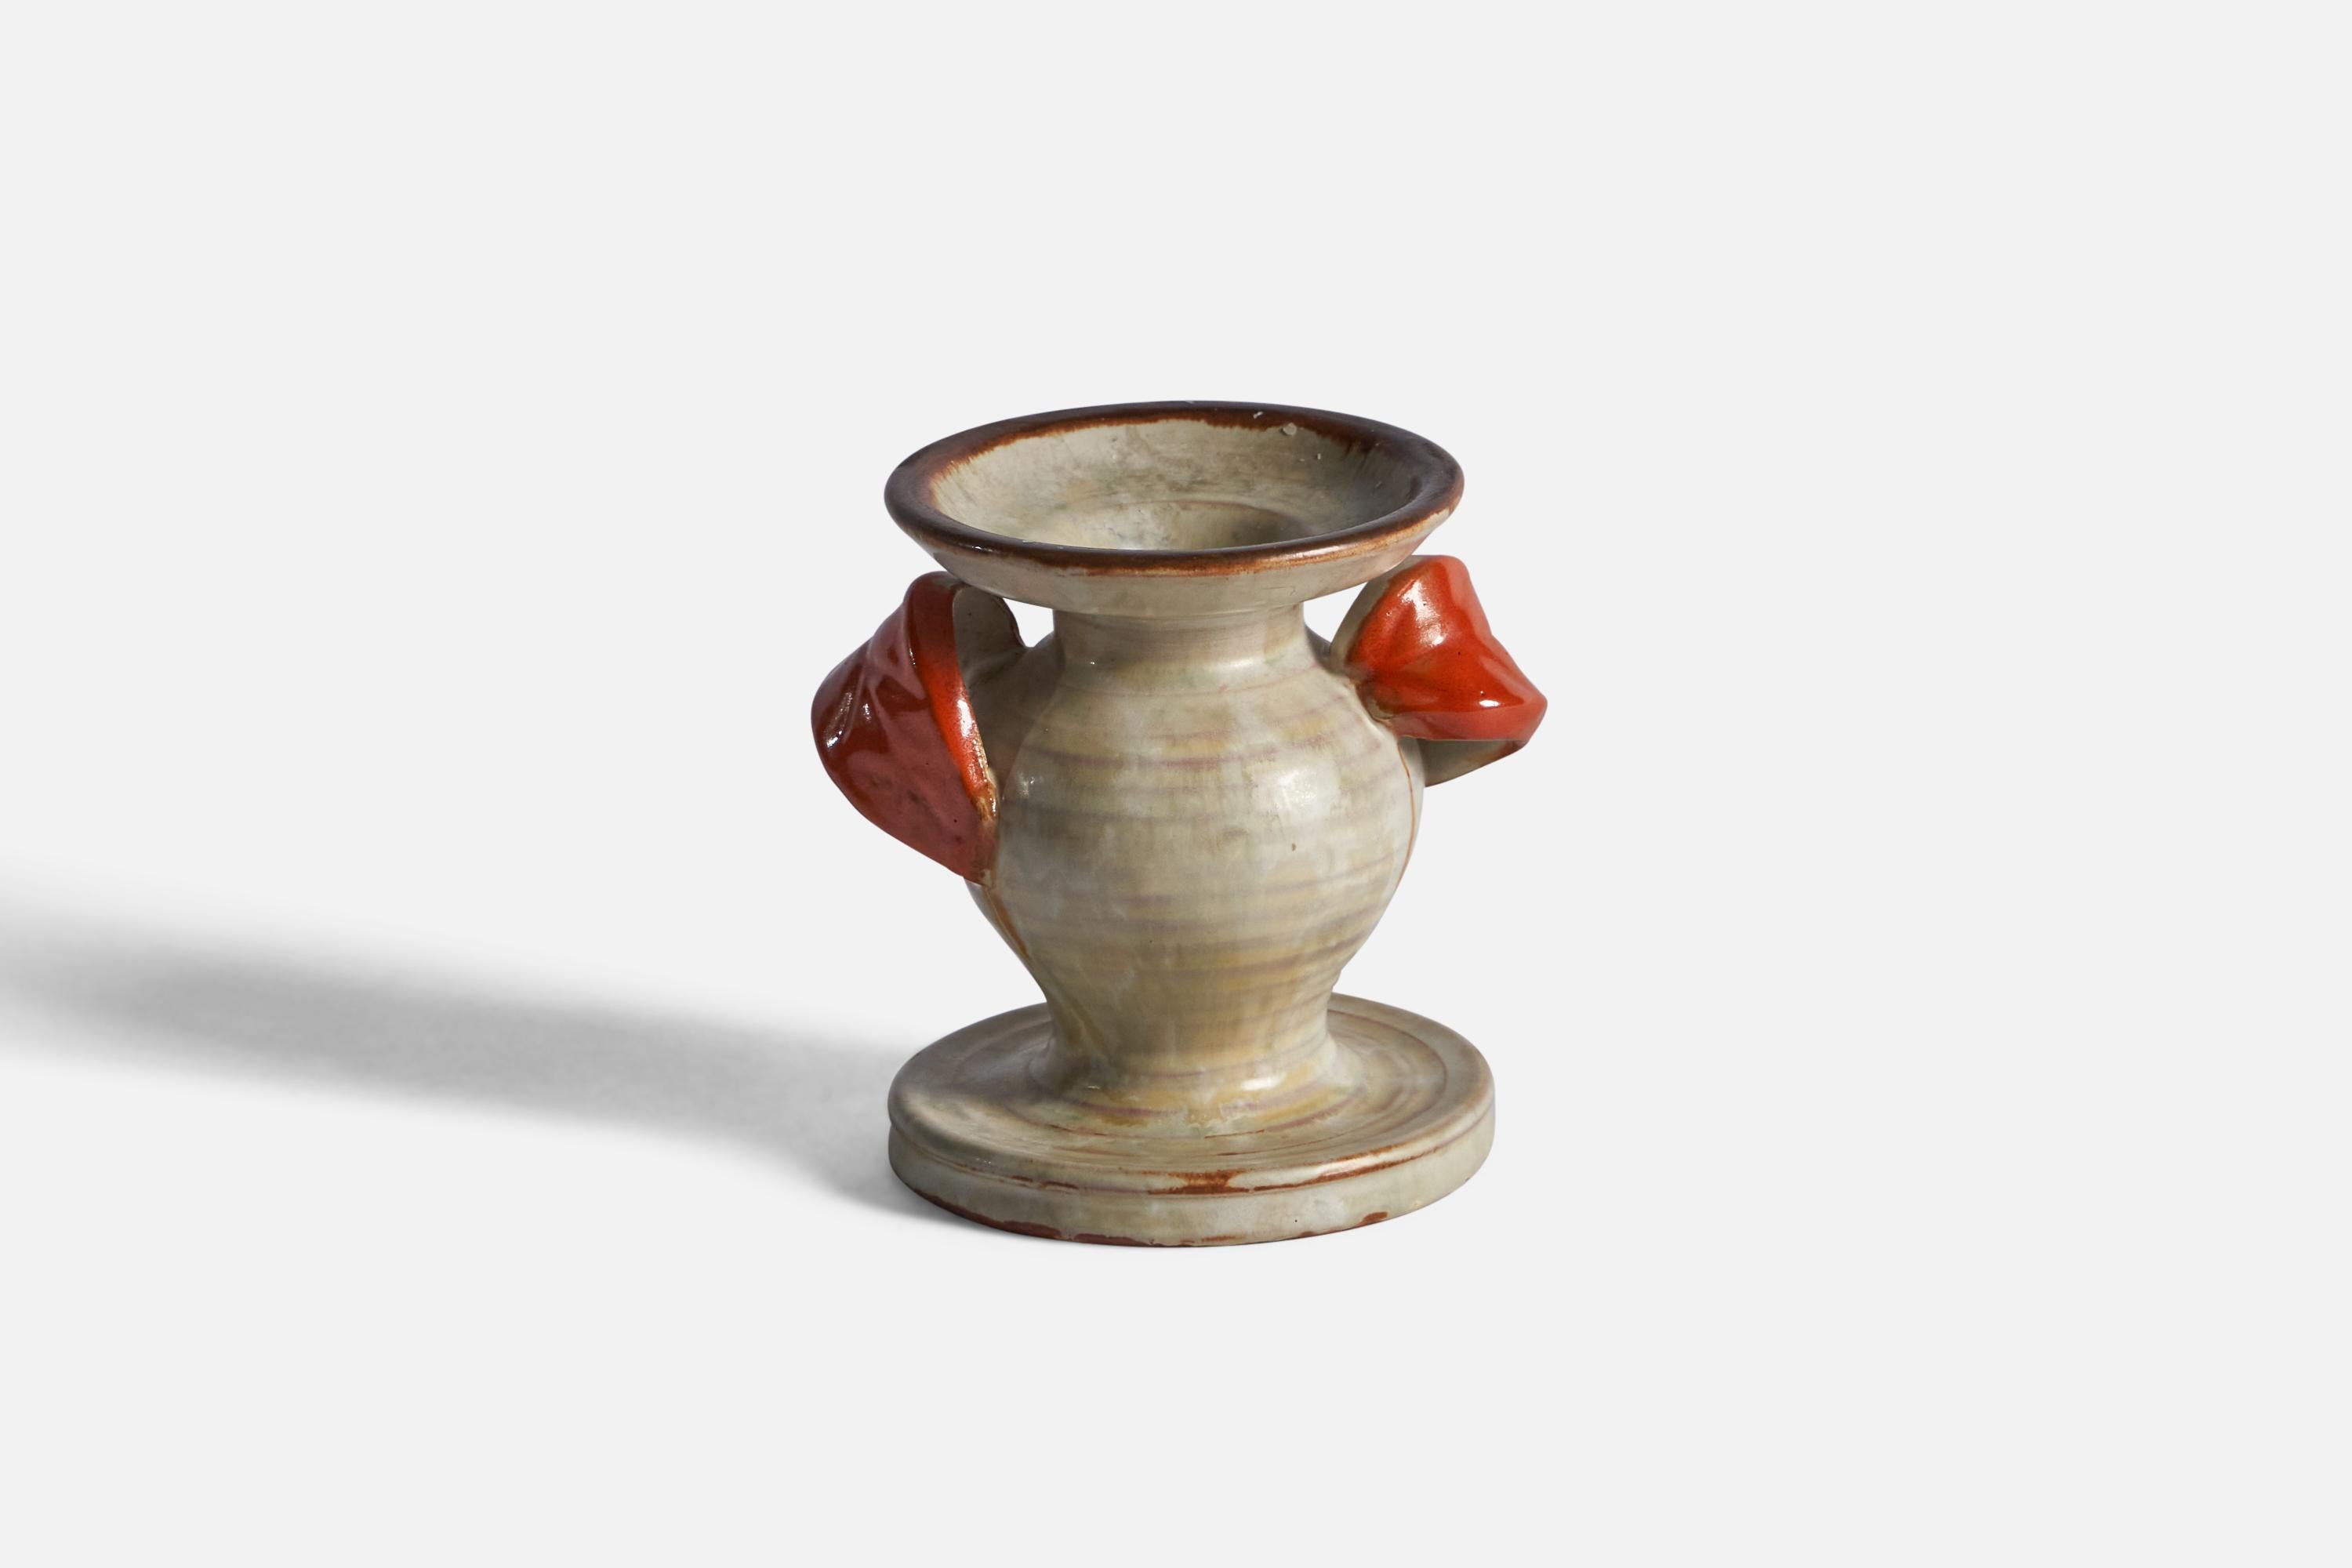 A small orange and beige-glazed earthenware vase, designed and produced by Upsala Ekeby, Sweden, c. 1930s.